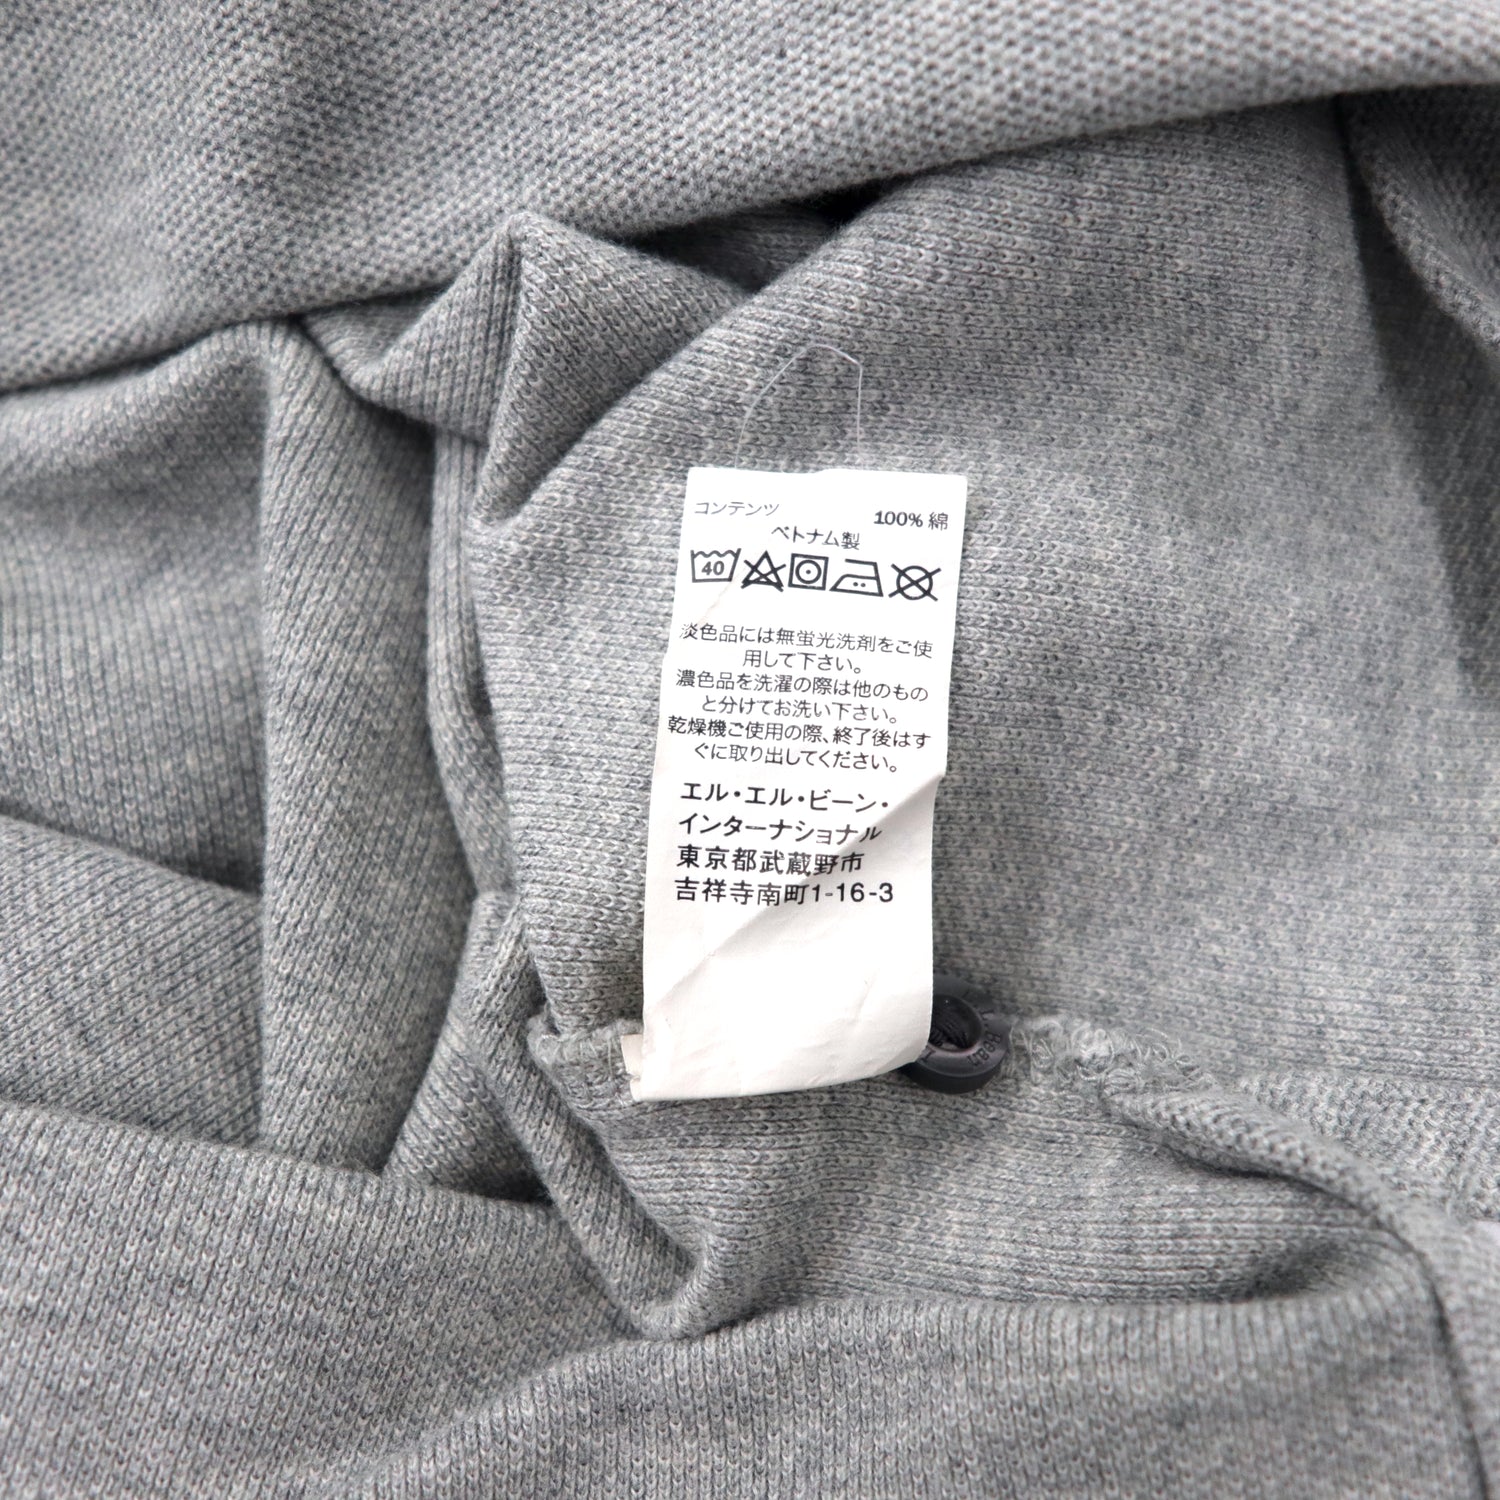 L.L.Bean Long Sleeve Polo Shirt XL Gray Cotton Traditional Fit Big 